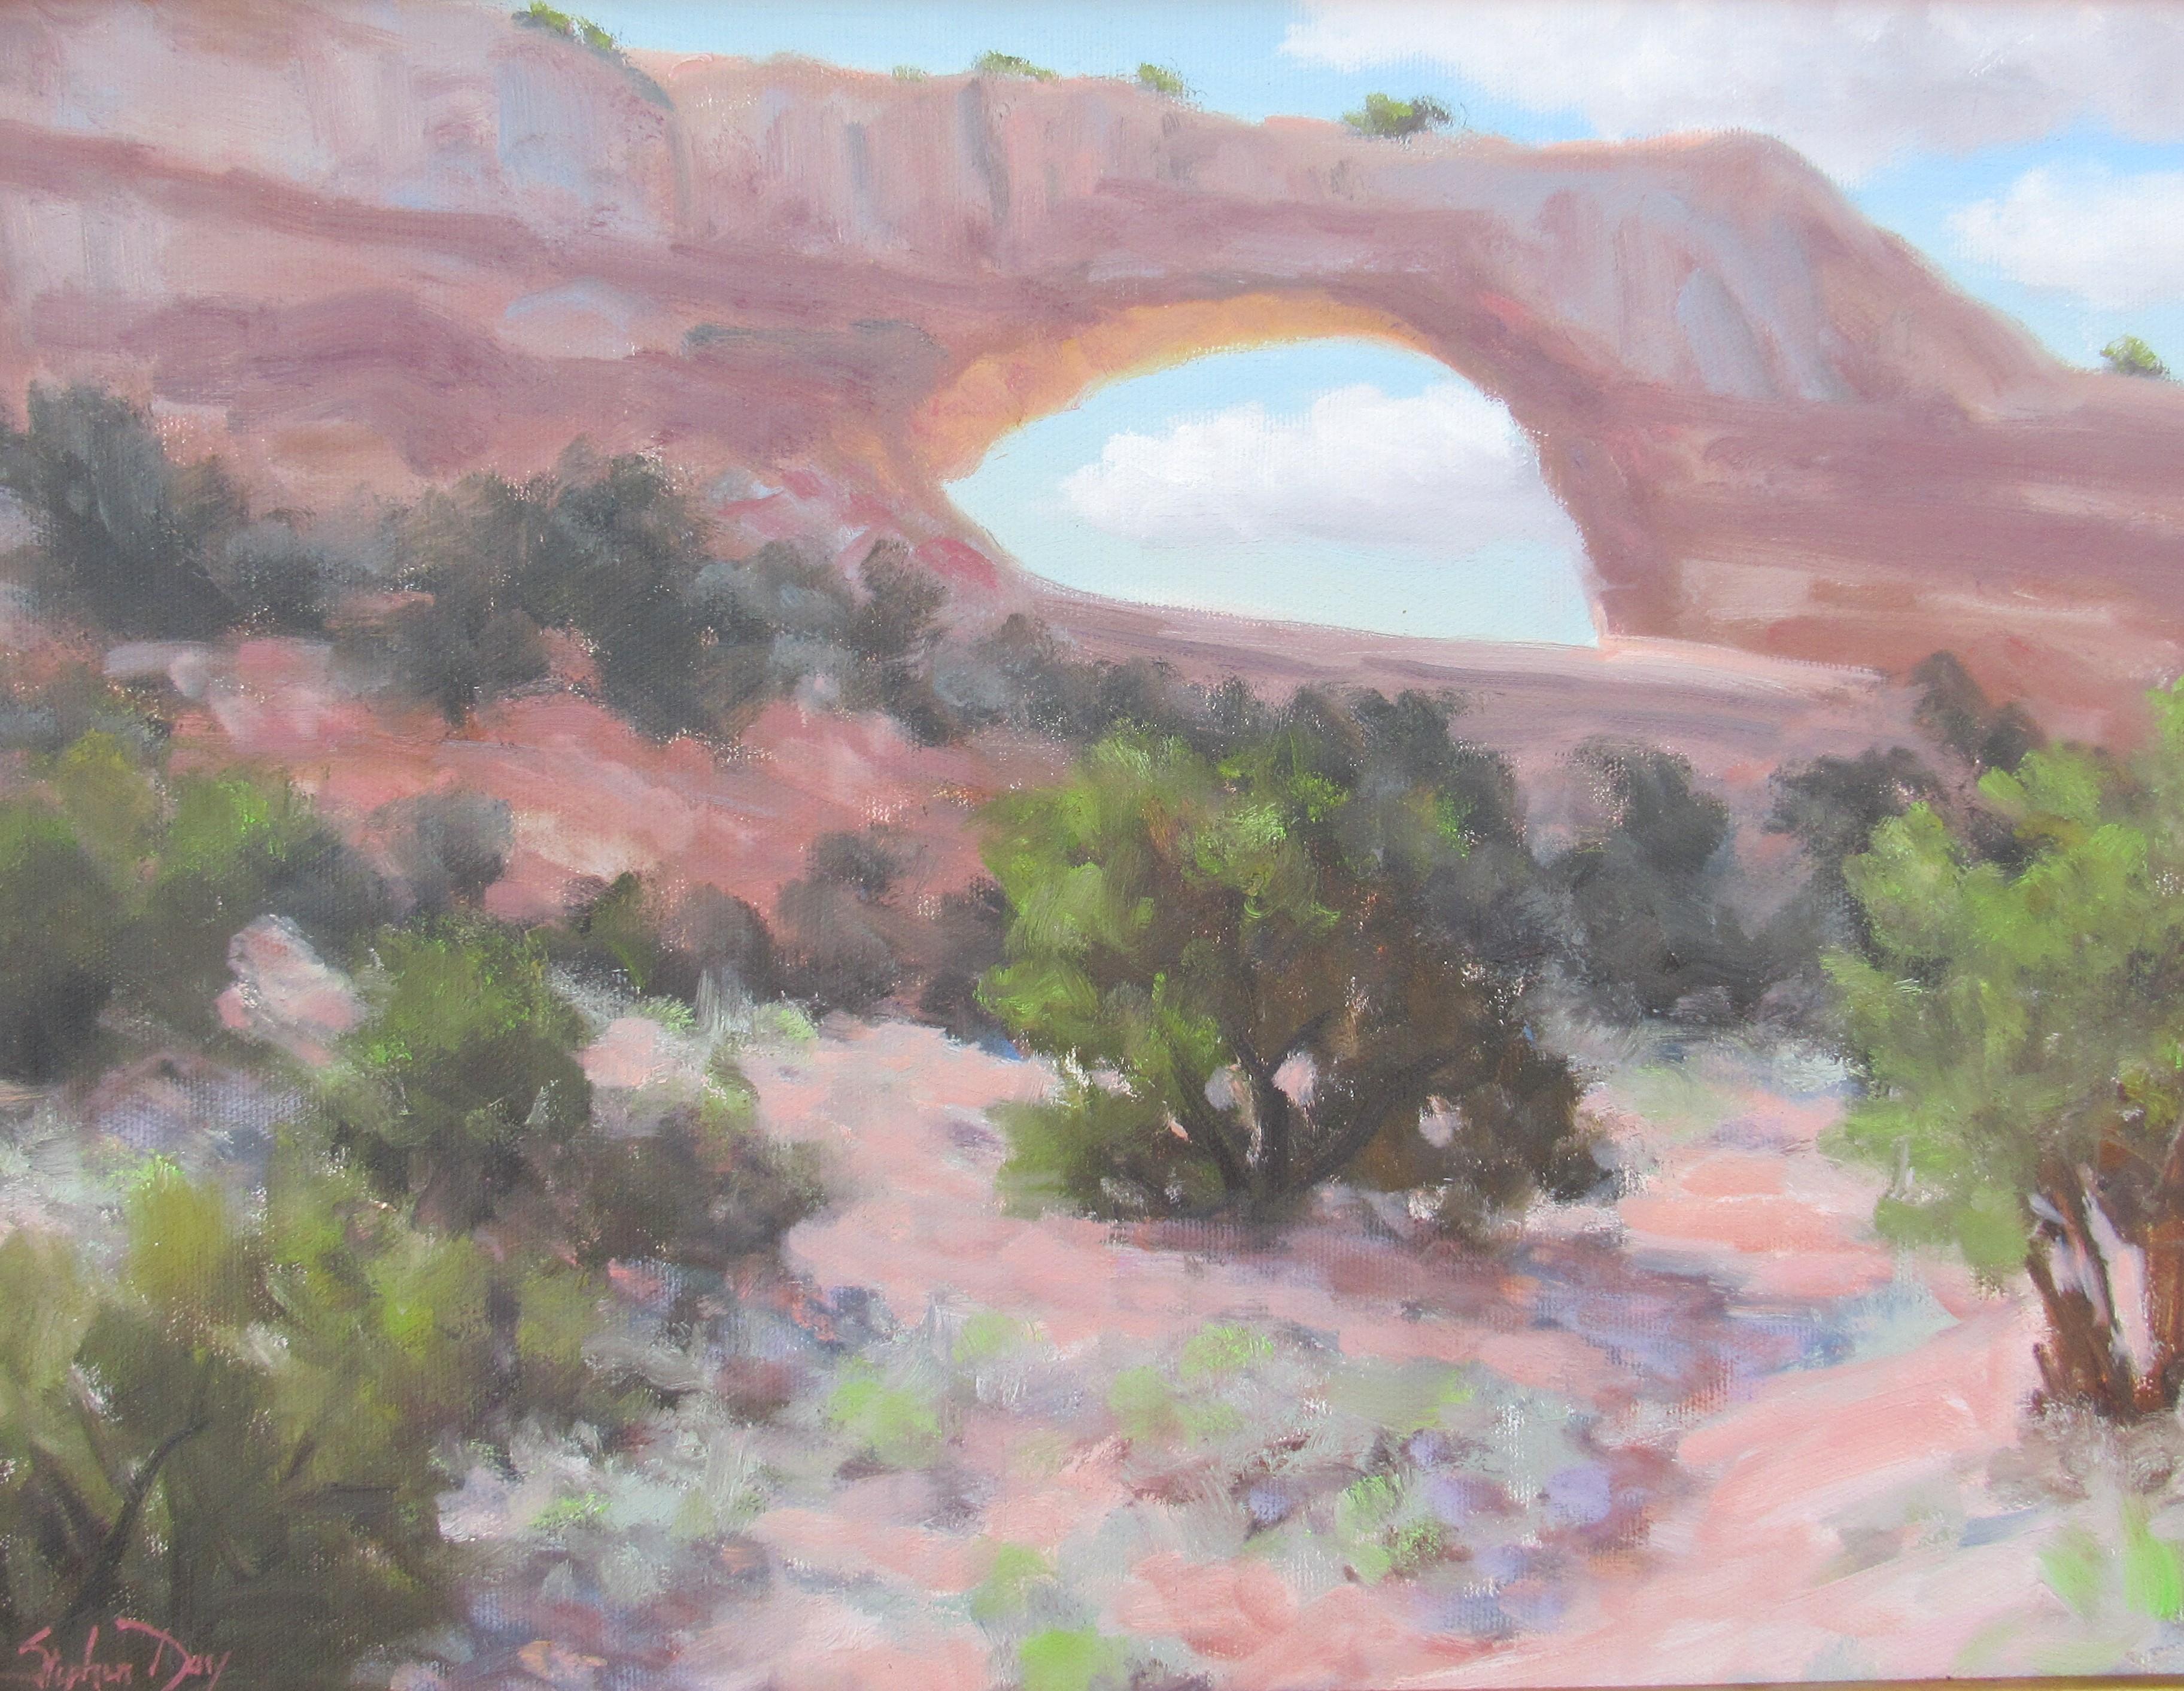 Figurative Painting Stephen Day - "Wilson Arch Near Moab, Utah", Peinture à l'huile